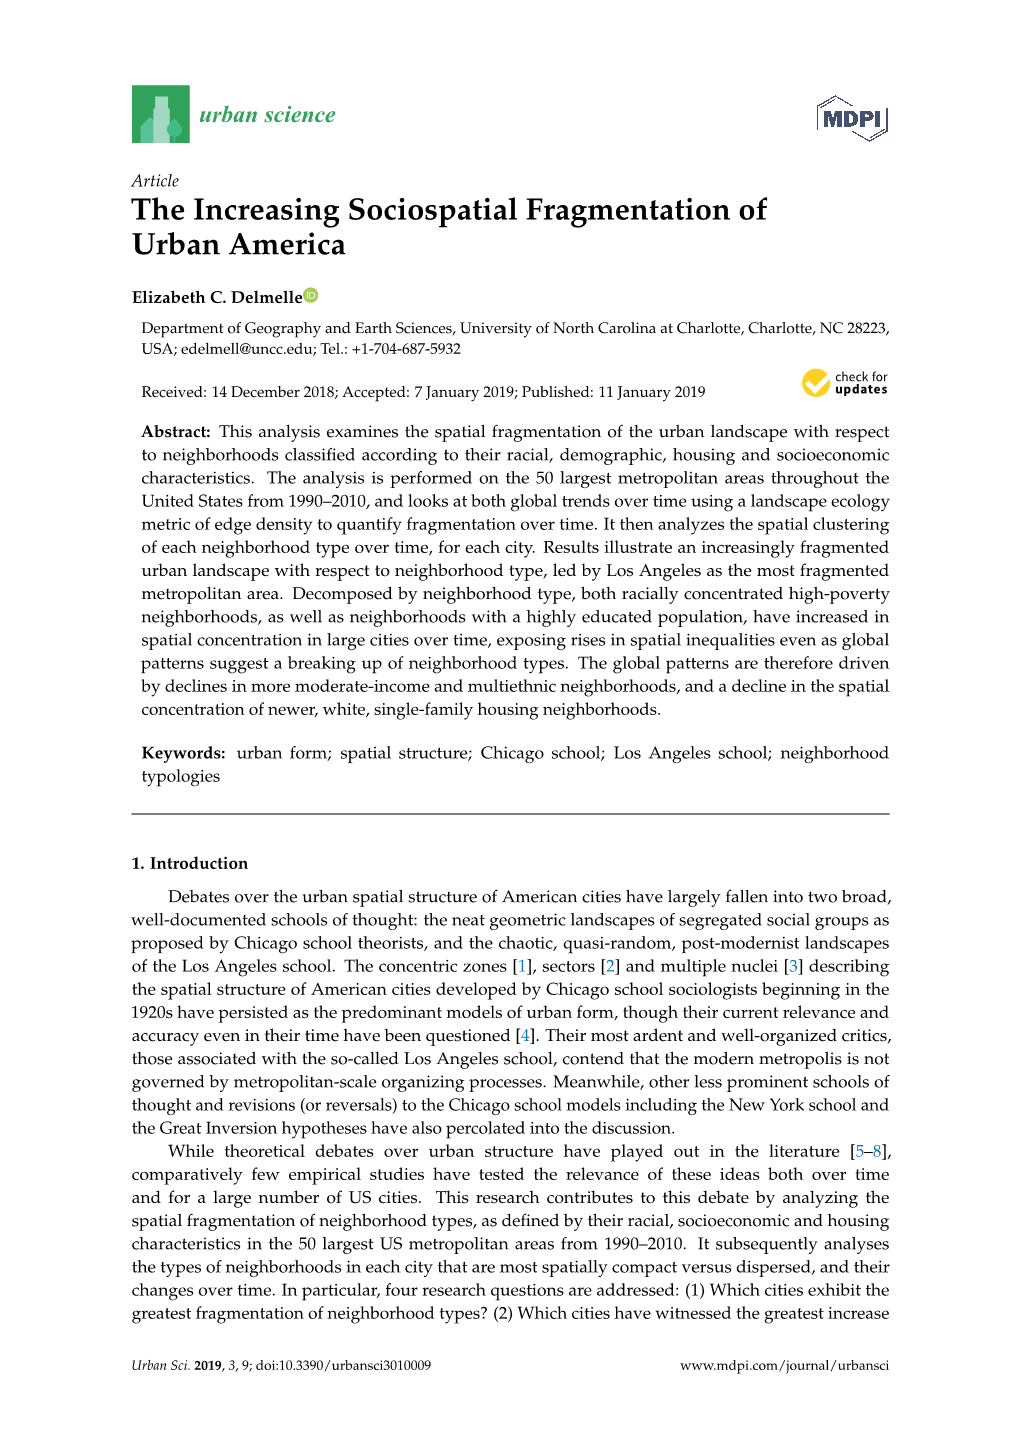 The Increasing Sociospatial Fragmentation of Urban America